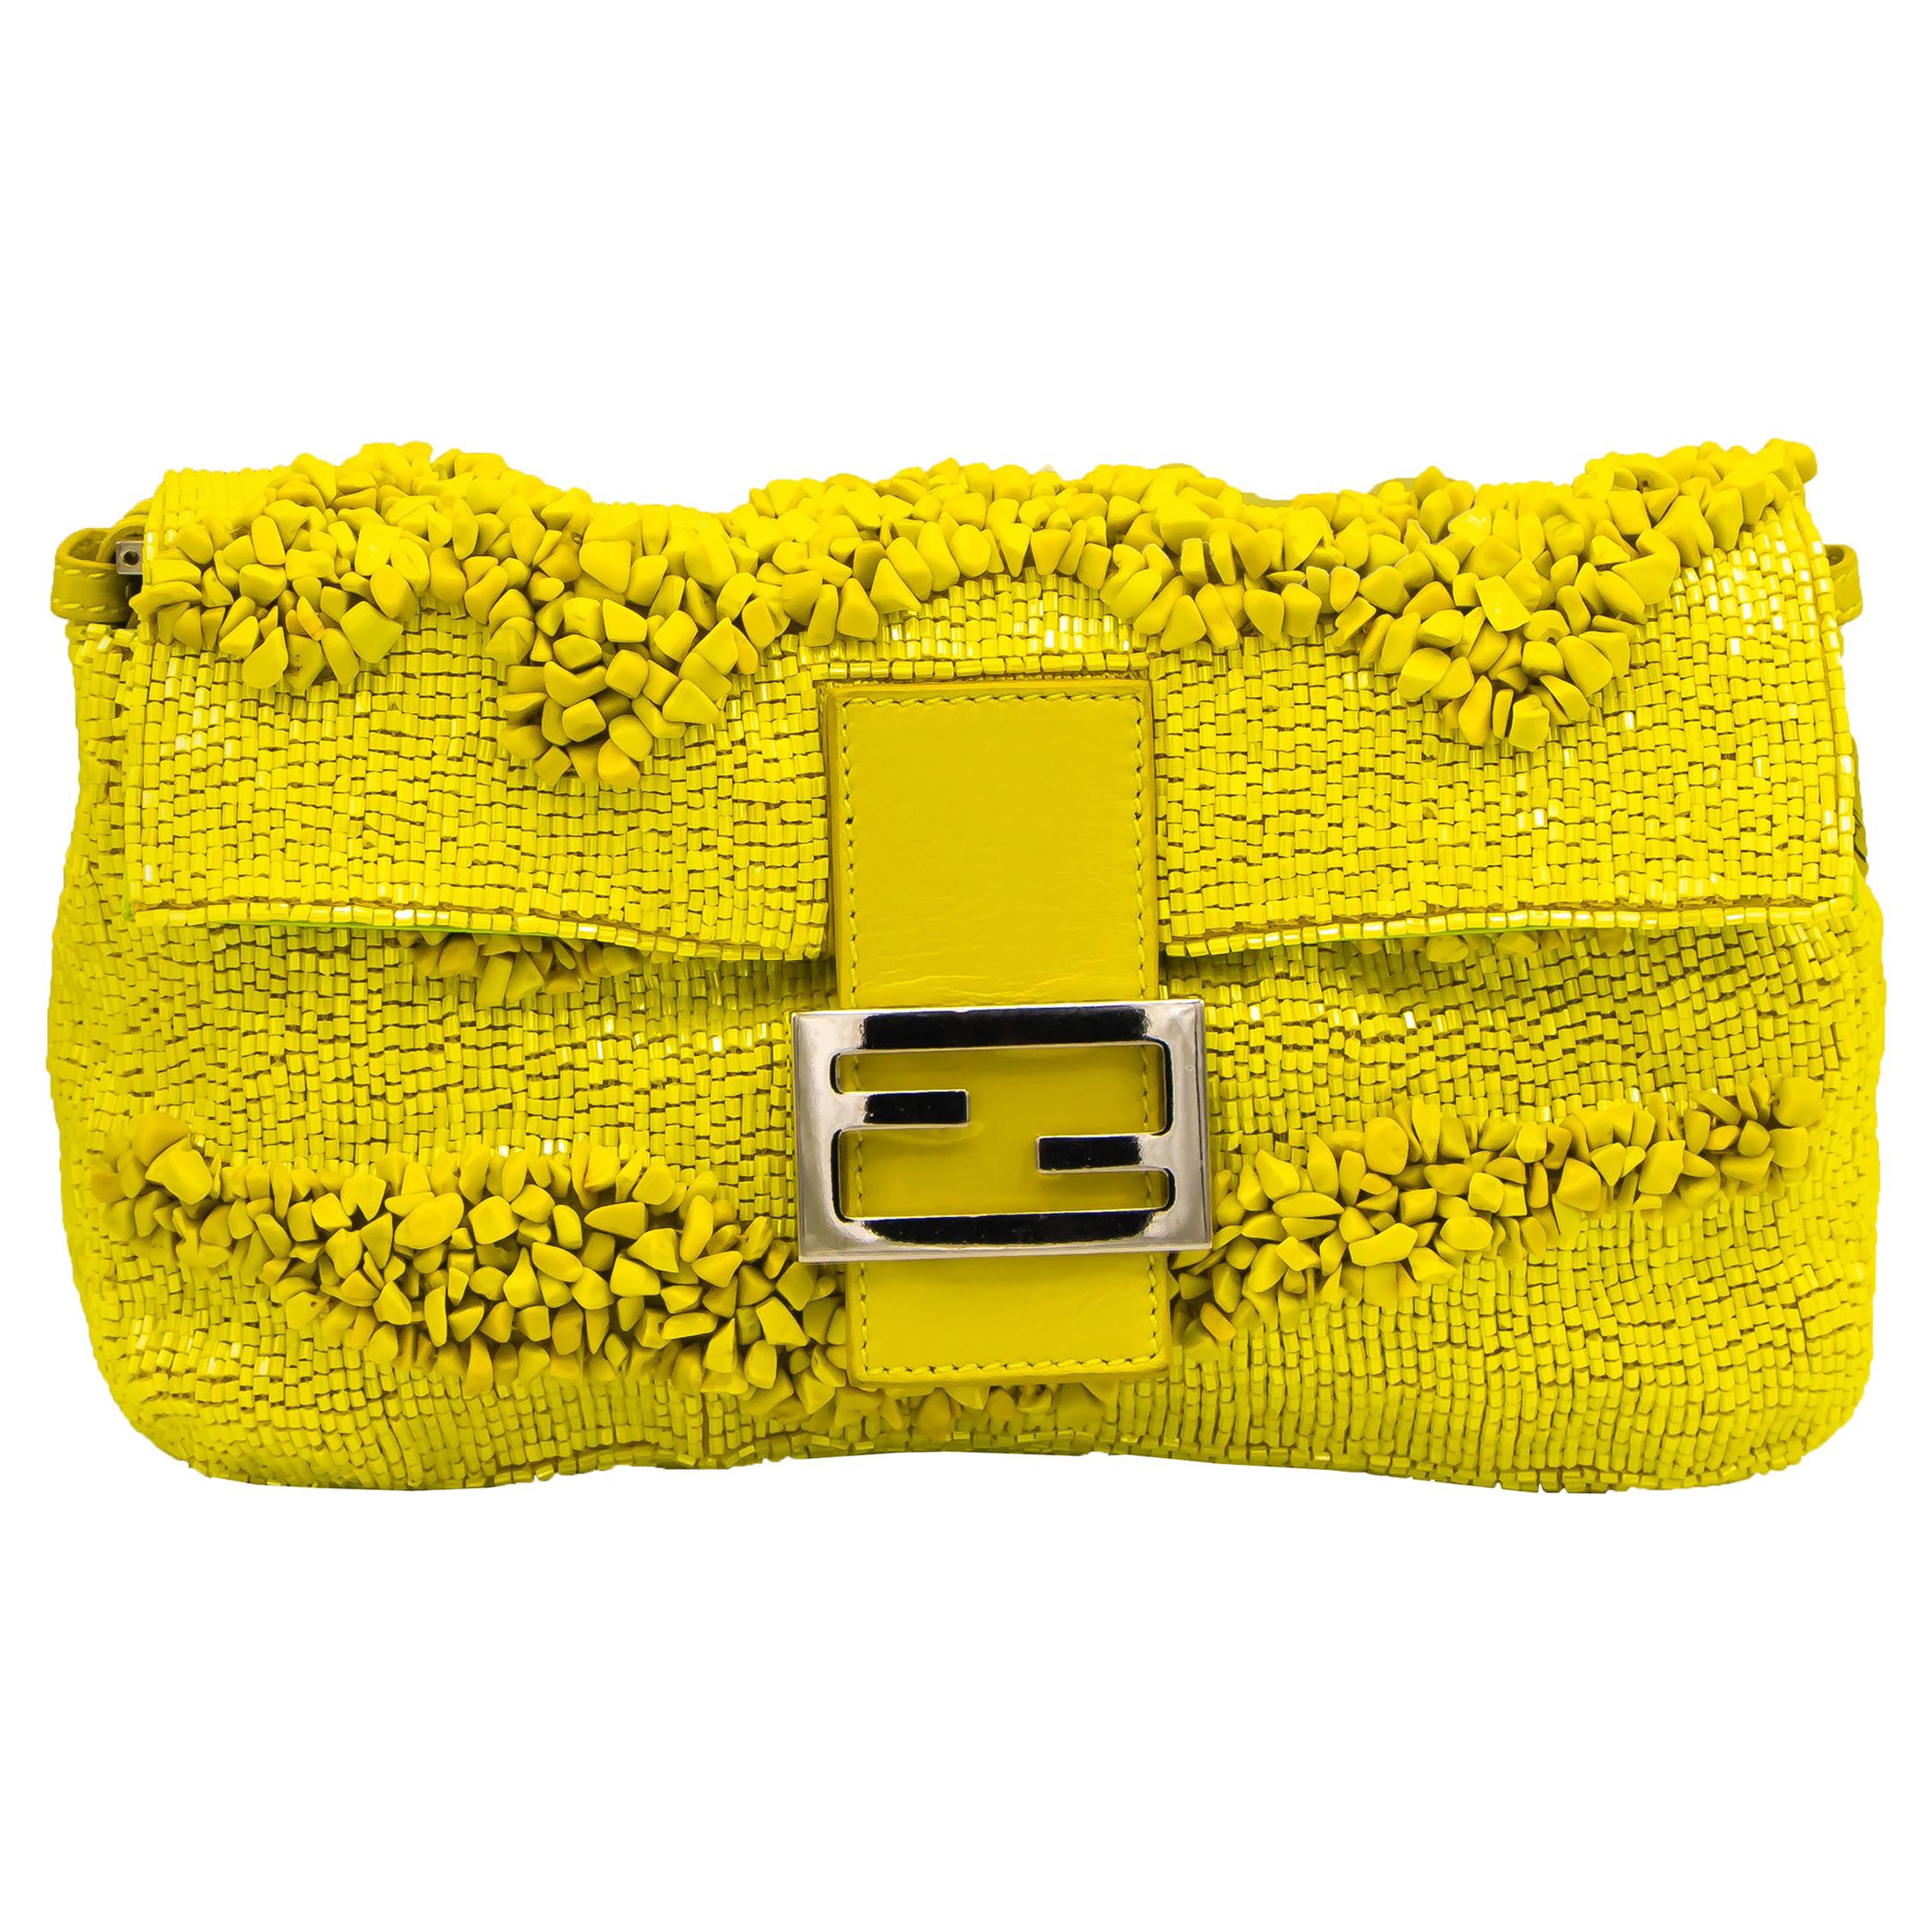 Fendi Bright Yellow Clutch Handbag